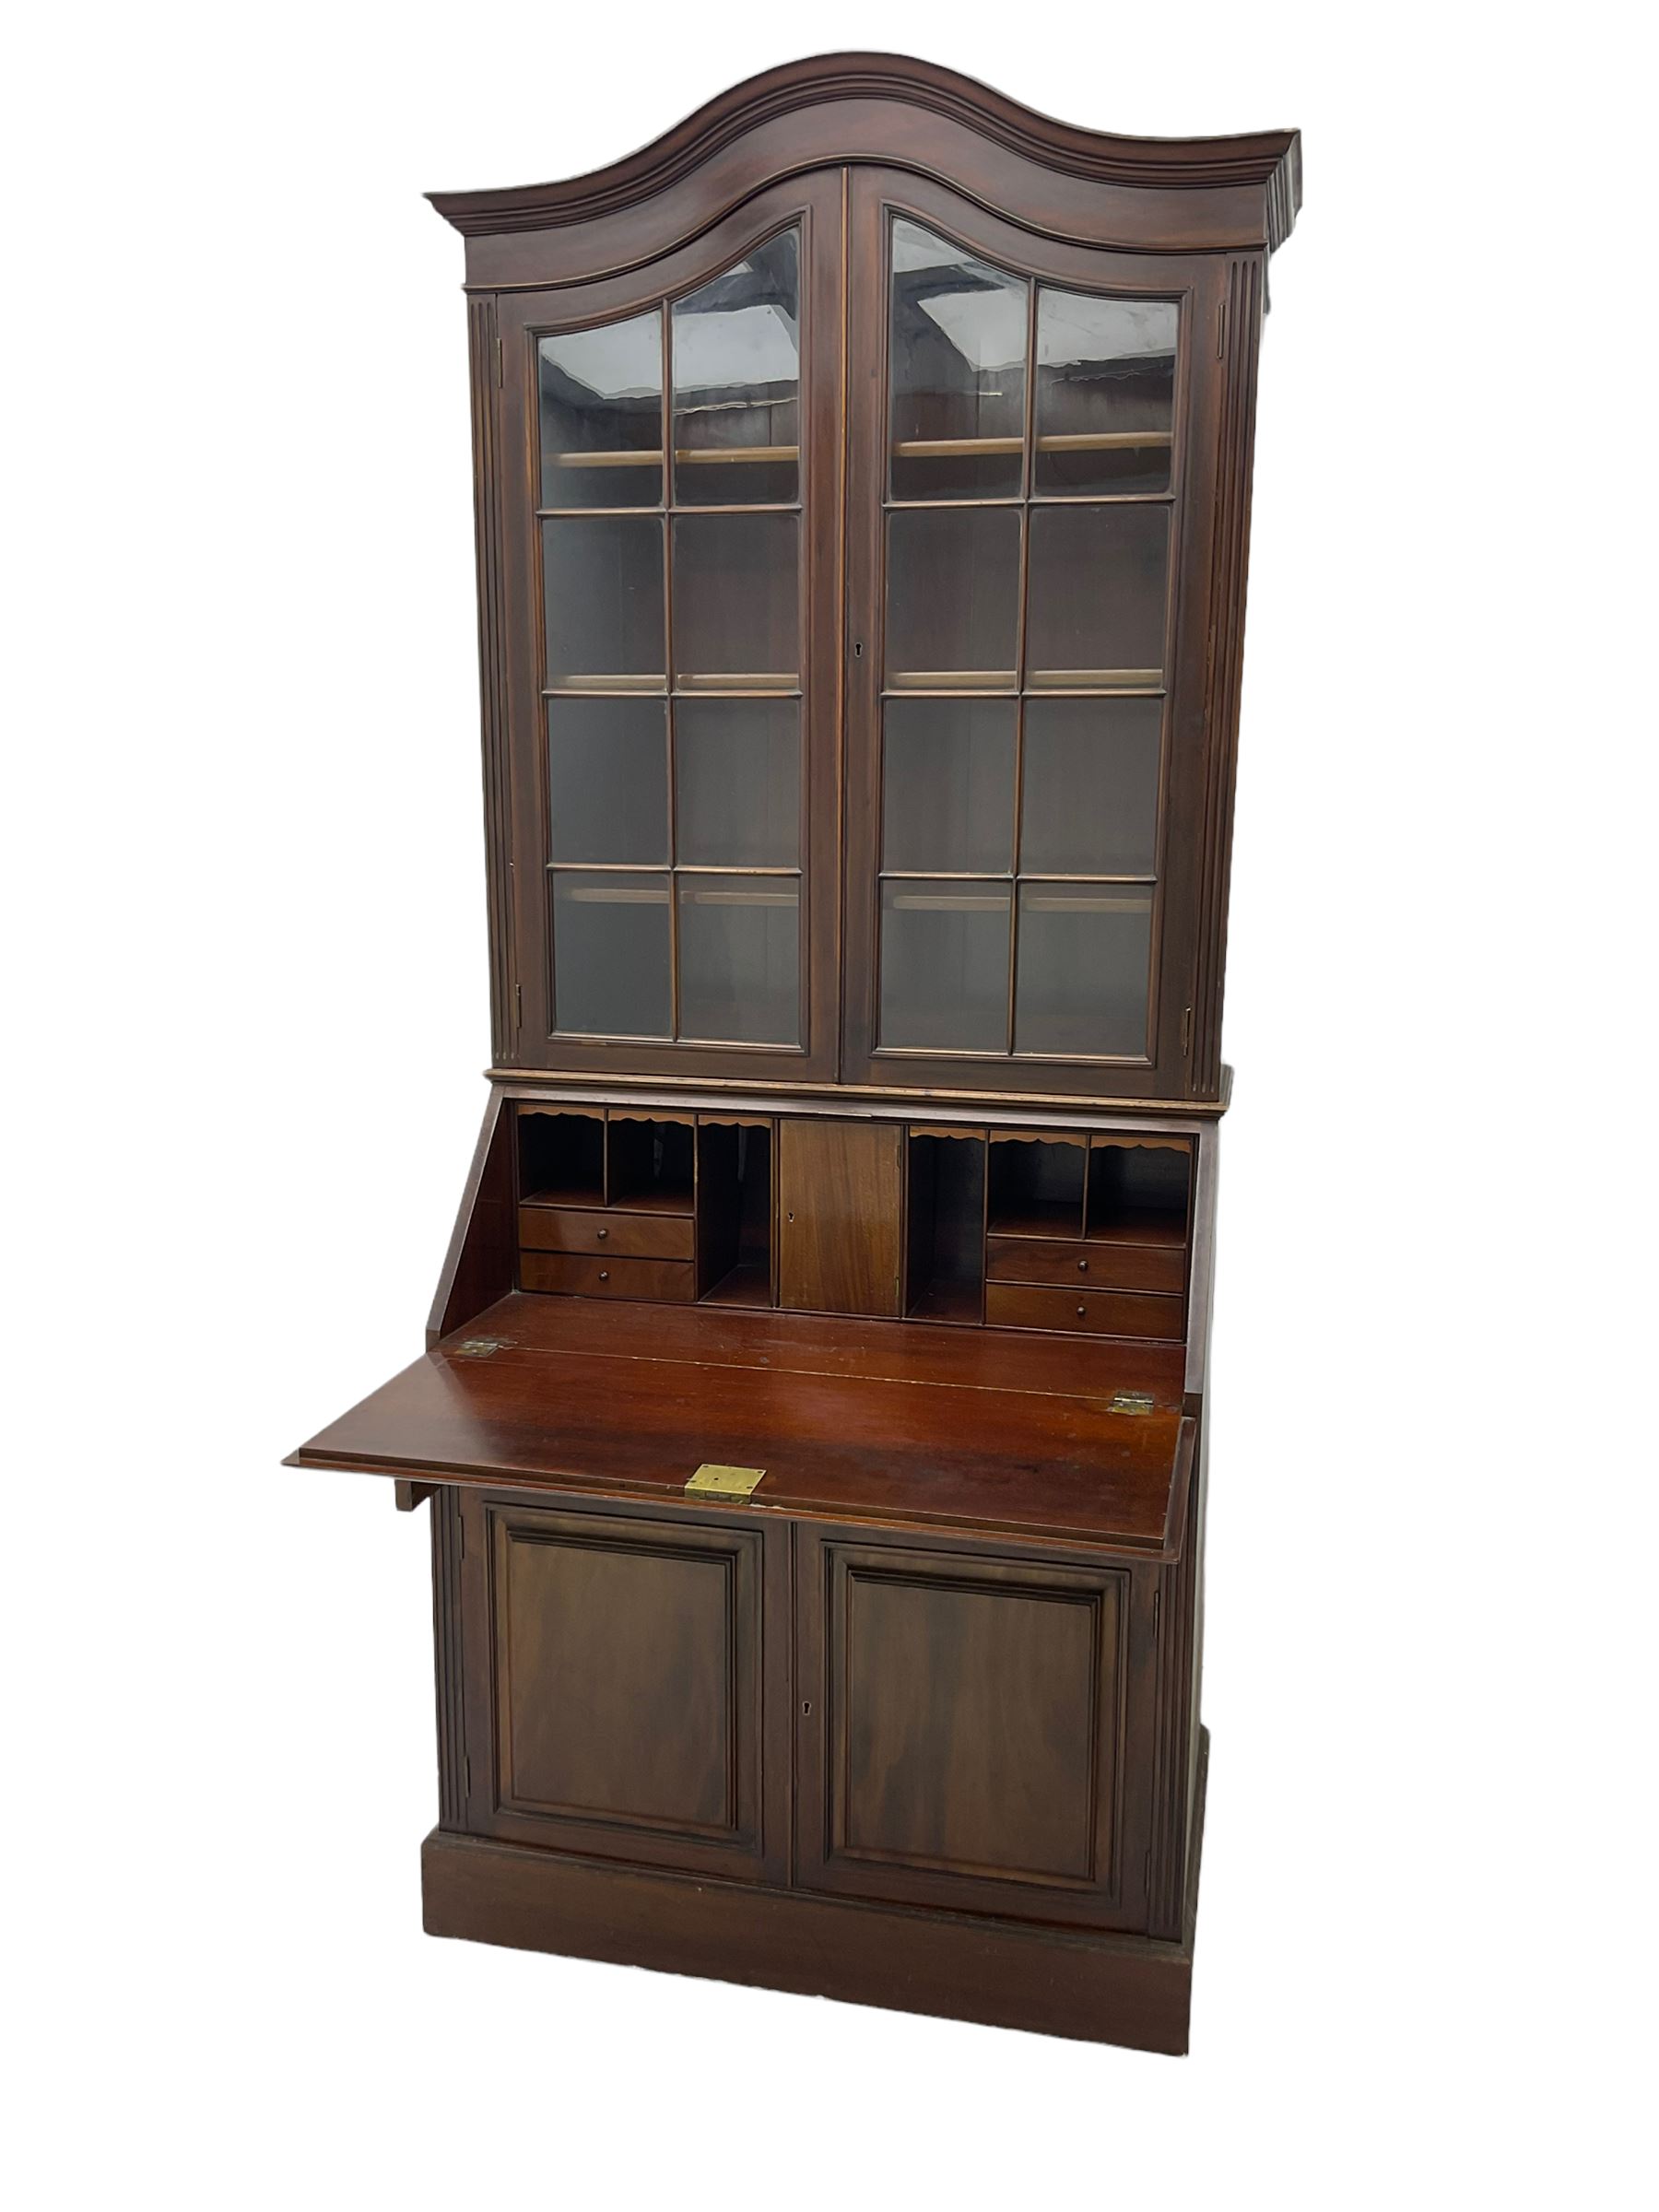 Late 19th century mahogany bureau bookcase - Image 2 of 5